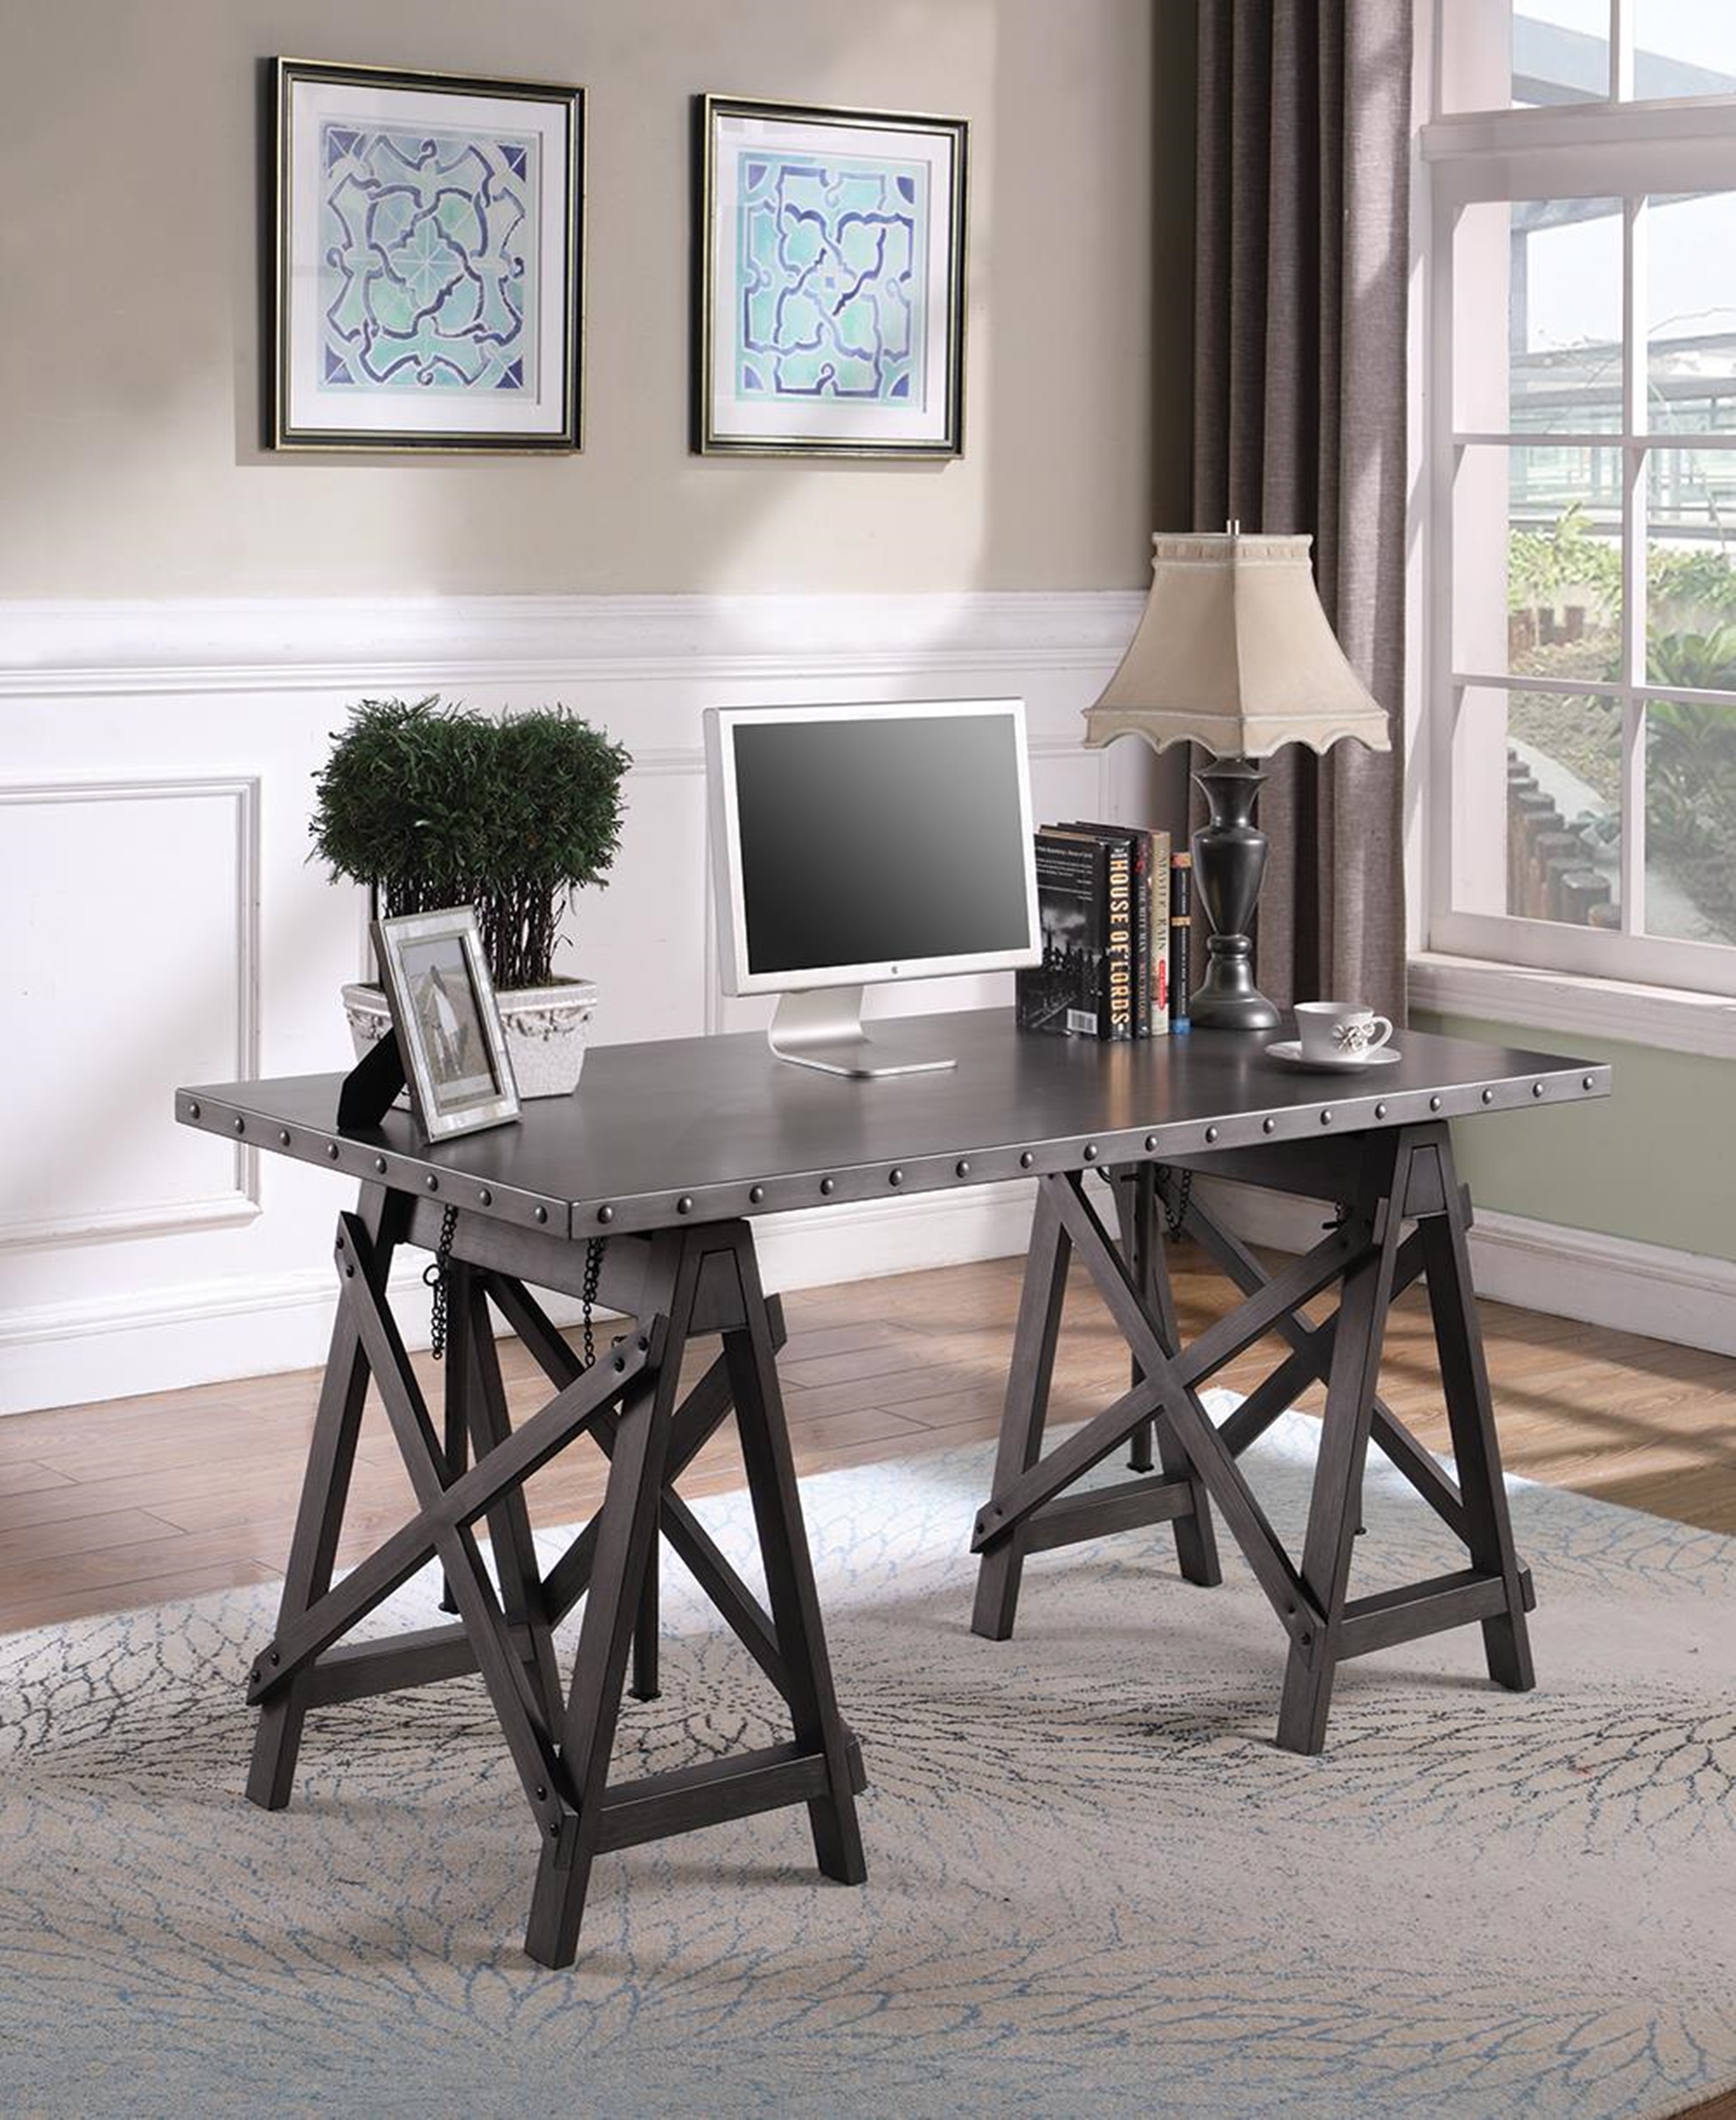 Industrial Galvanized Grey Adjustable Desk